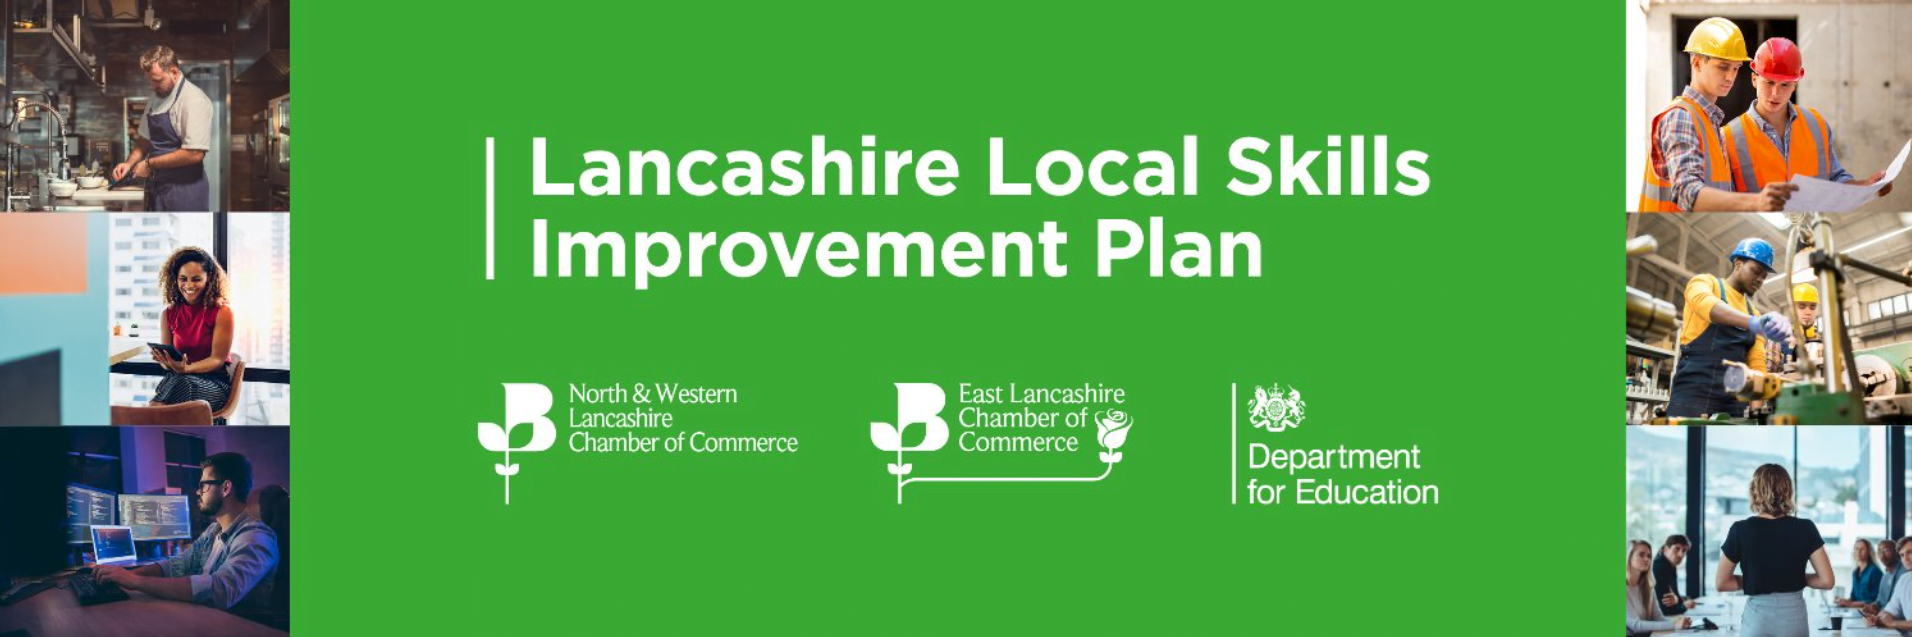 Lancashire’s Local Skills Improvement Plan